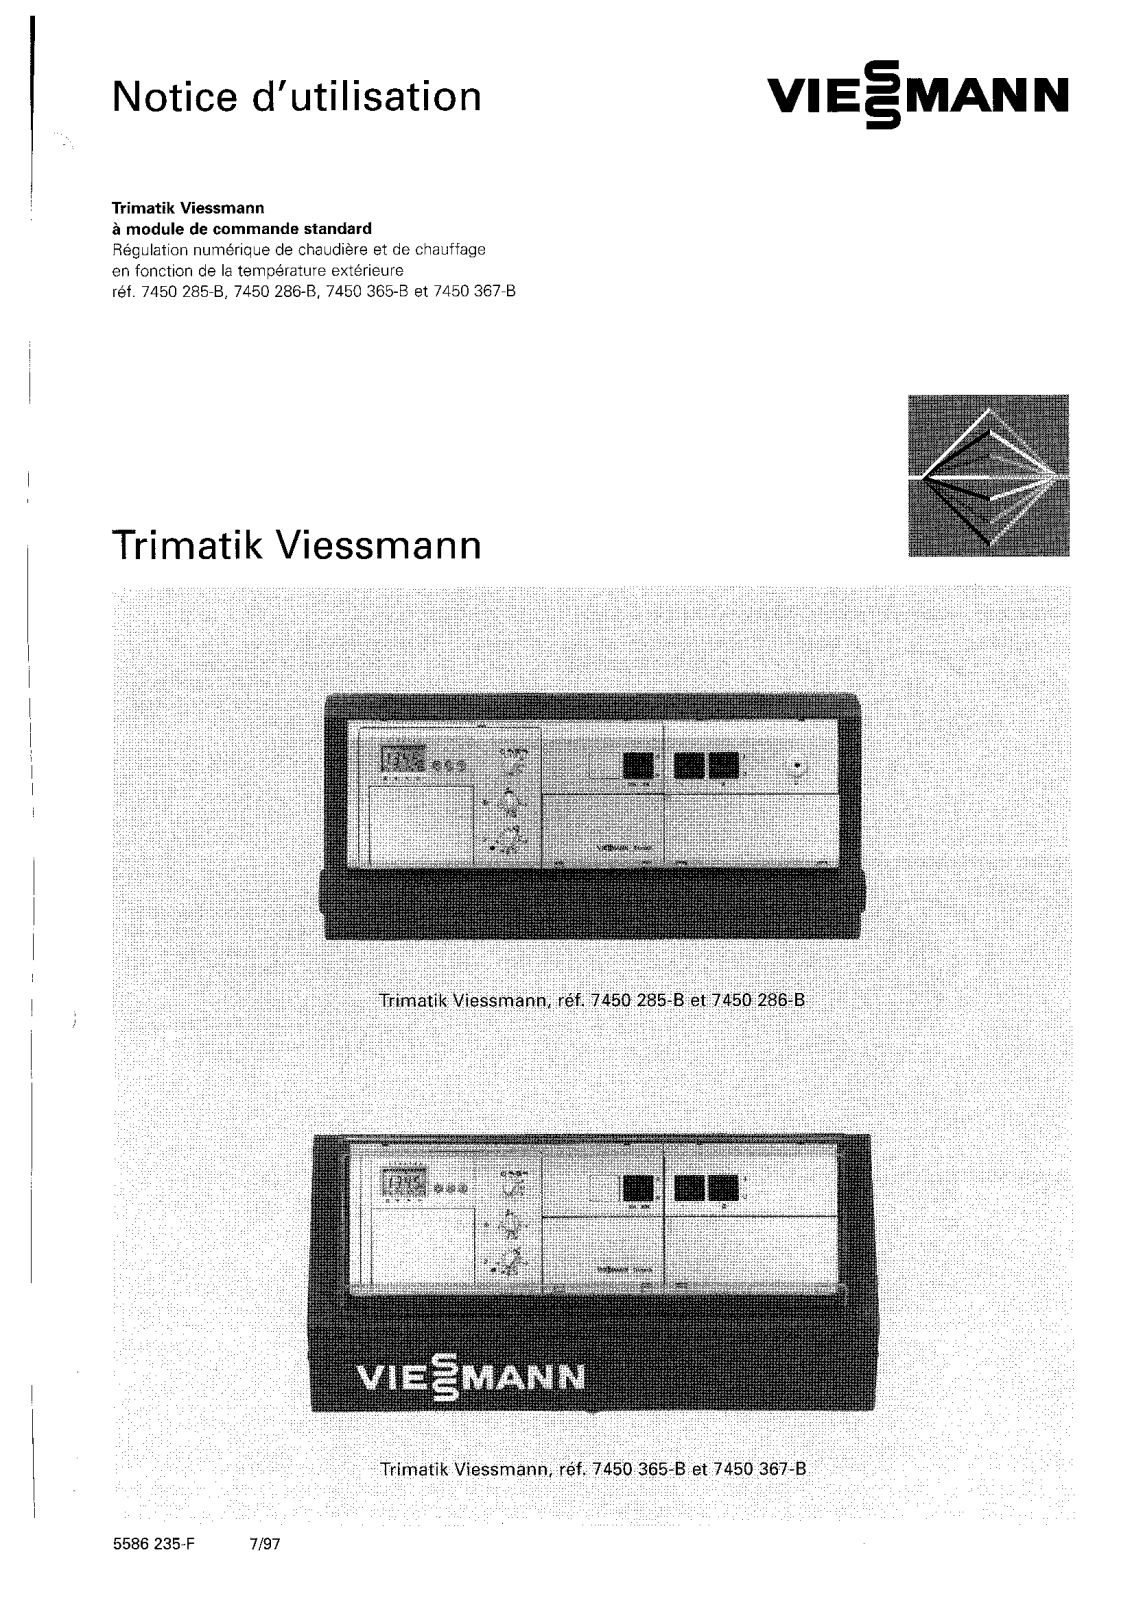 VIESSMANN VITOLA BIFERRAL, VITOLA BIFERRAL TRIMATIK User Manual